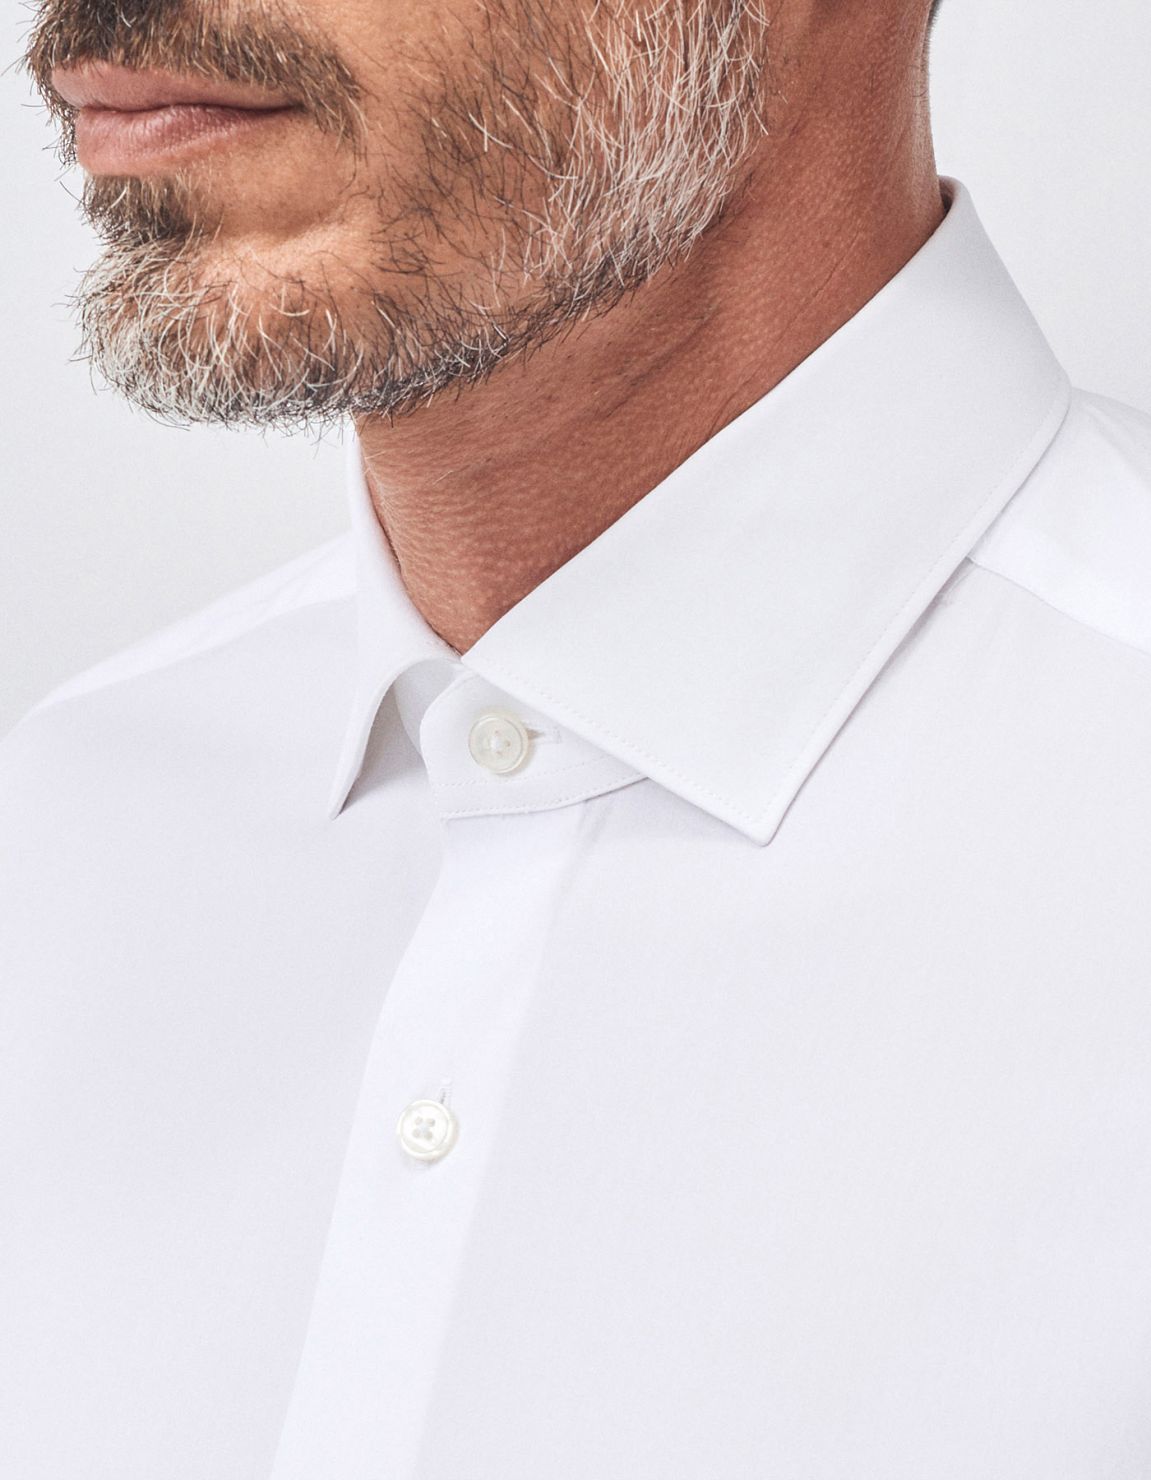 Shirt Collar small cutaway White Canvas Slim Fit 3